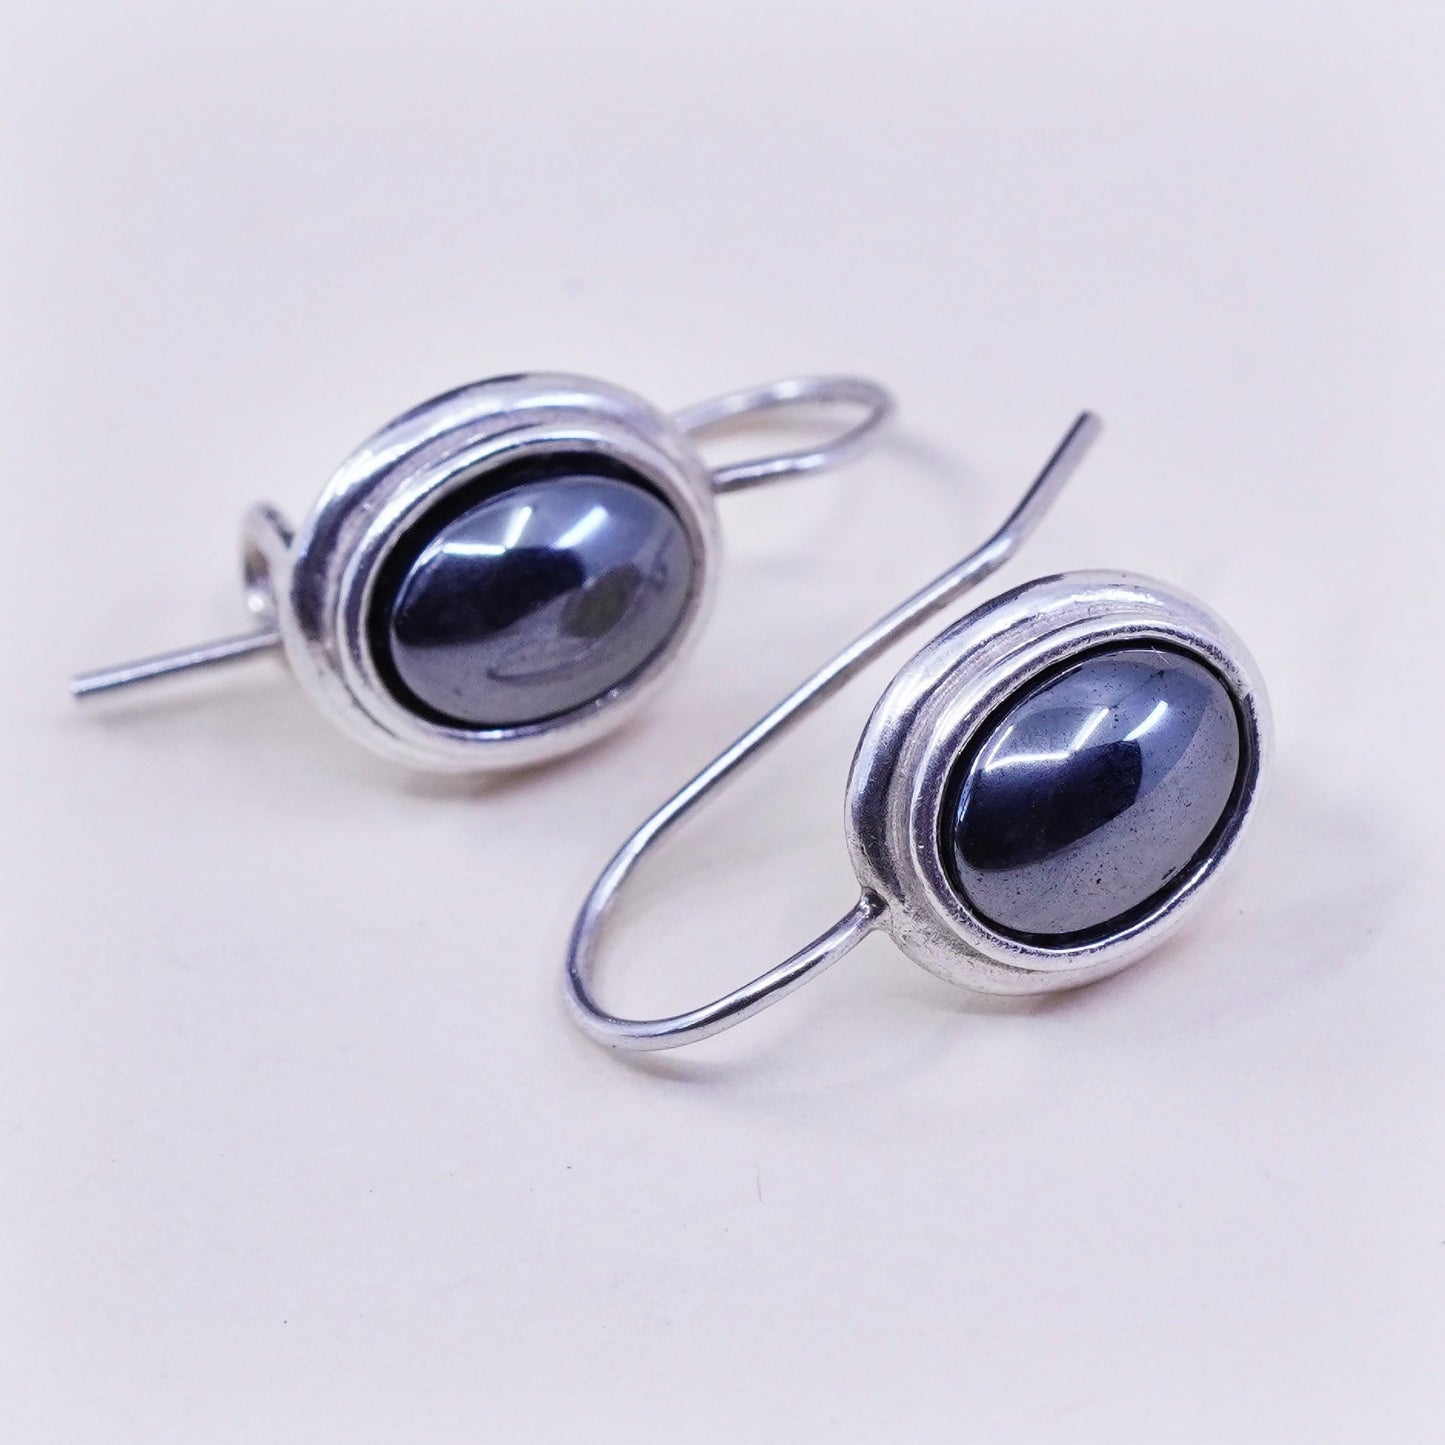 Vintage 925 Sterling silver handmade earrings with oval hematite